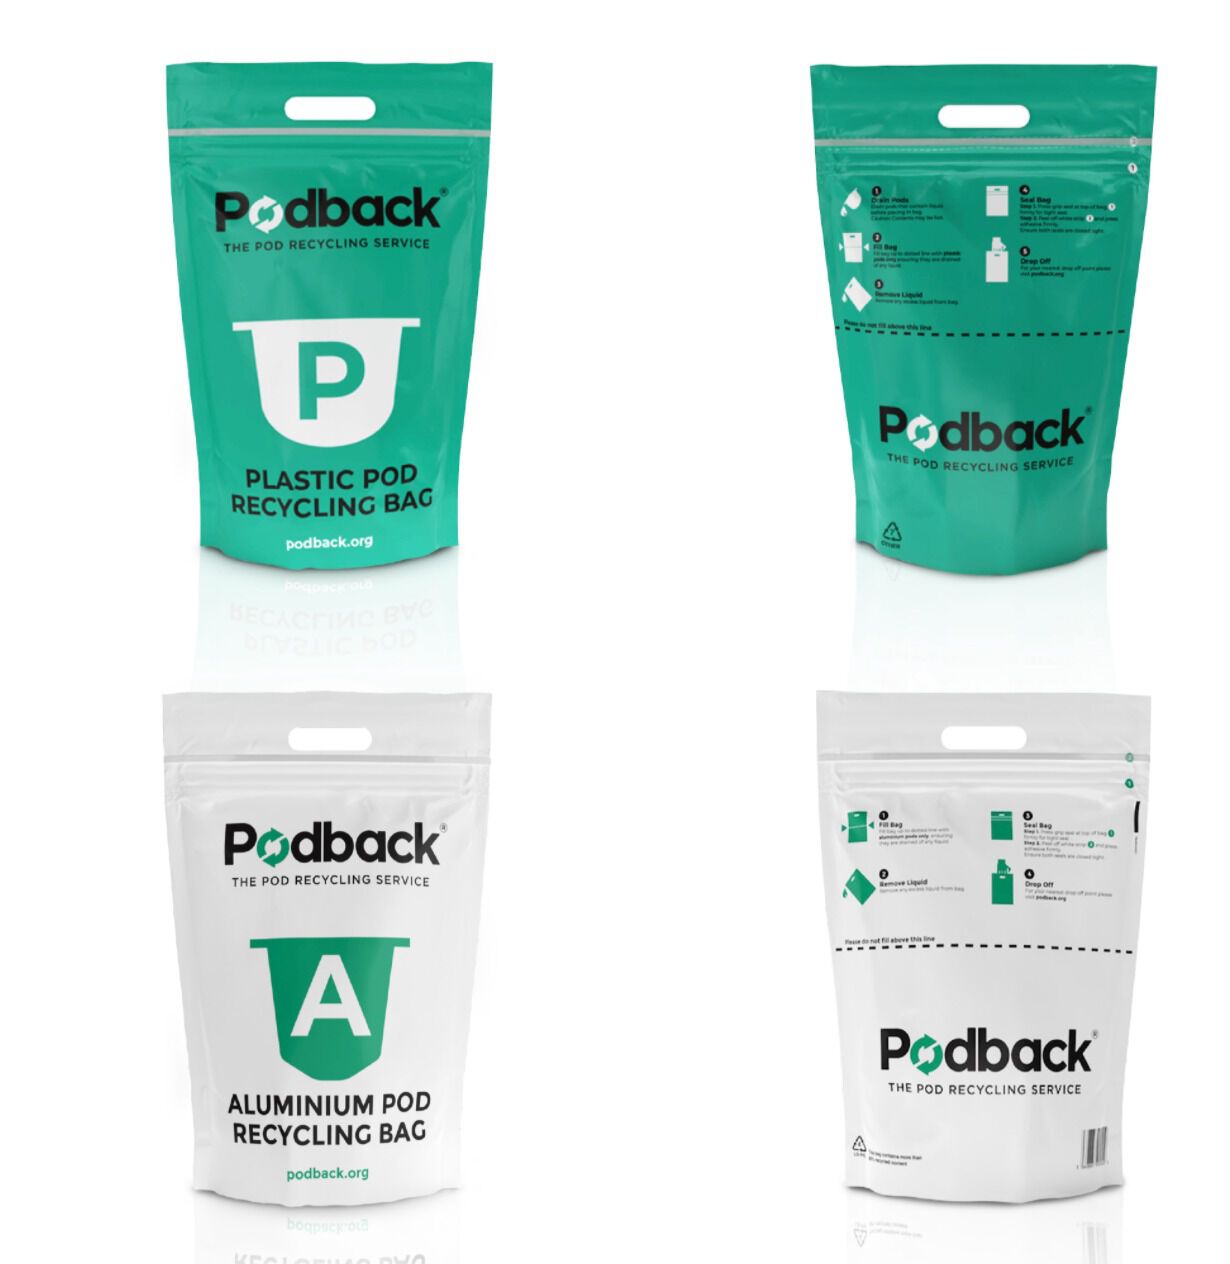 Free Podback bag for plastic pod (Iperespresso) recycling